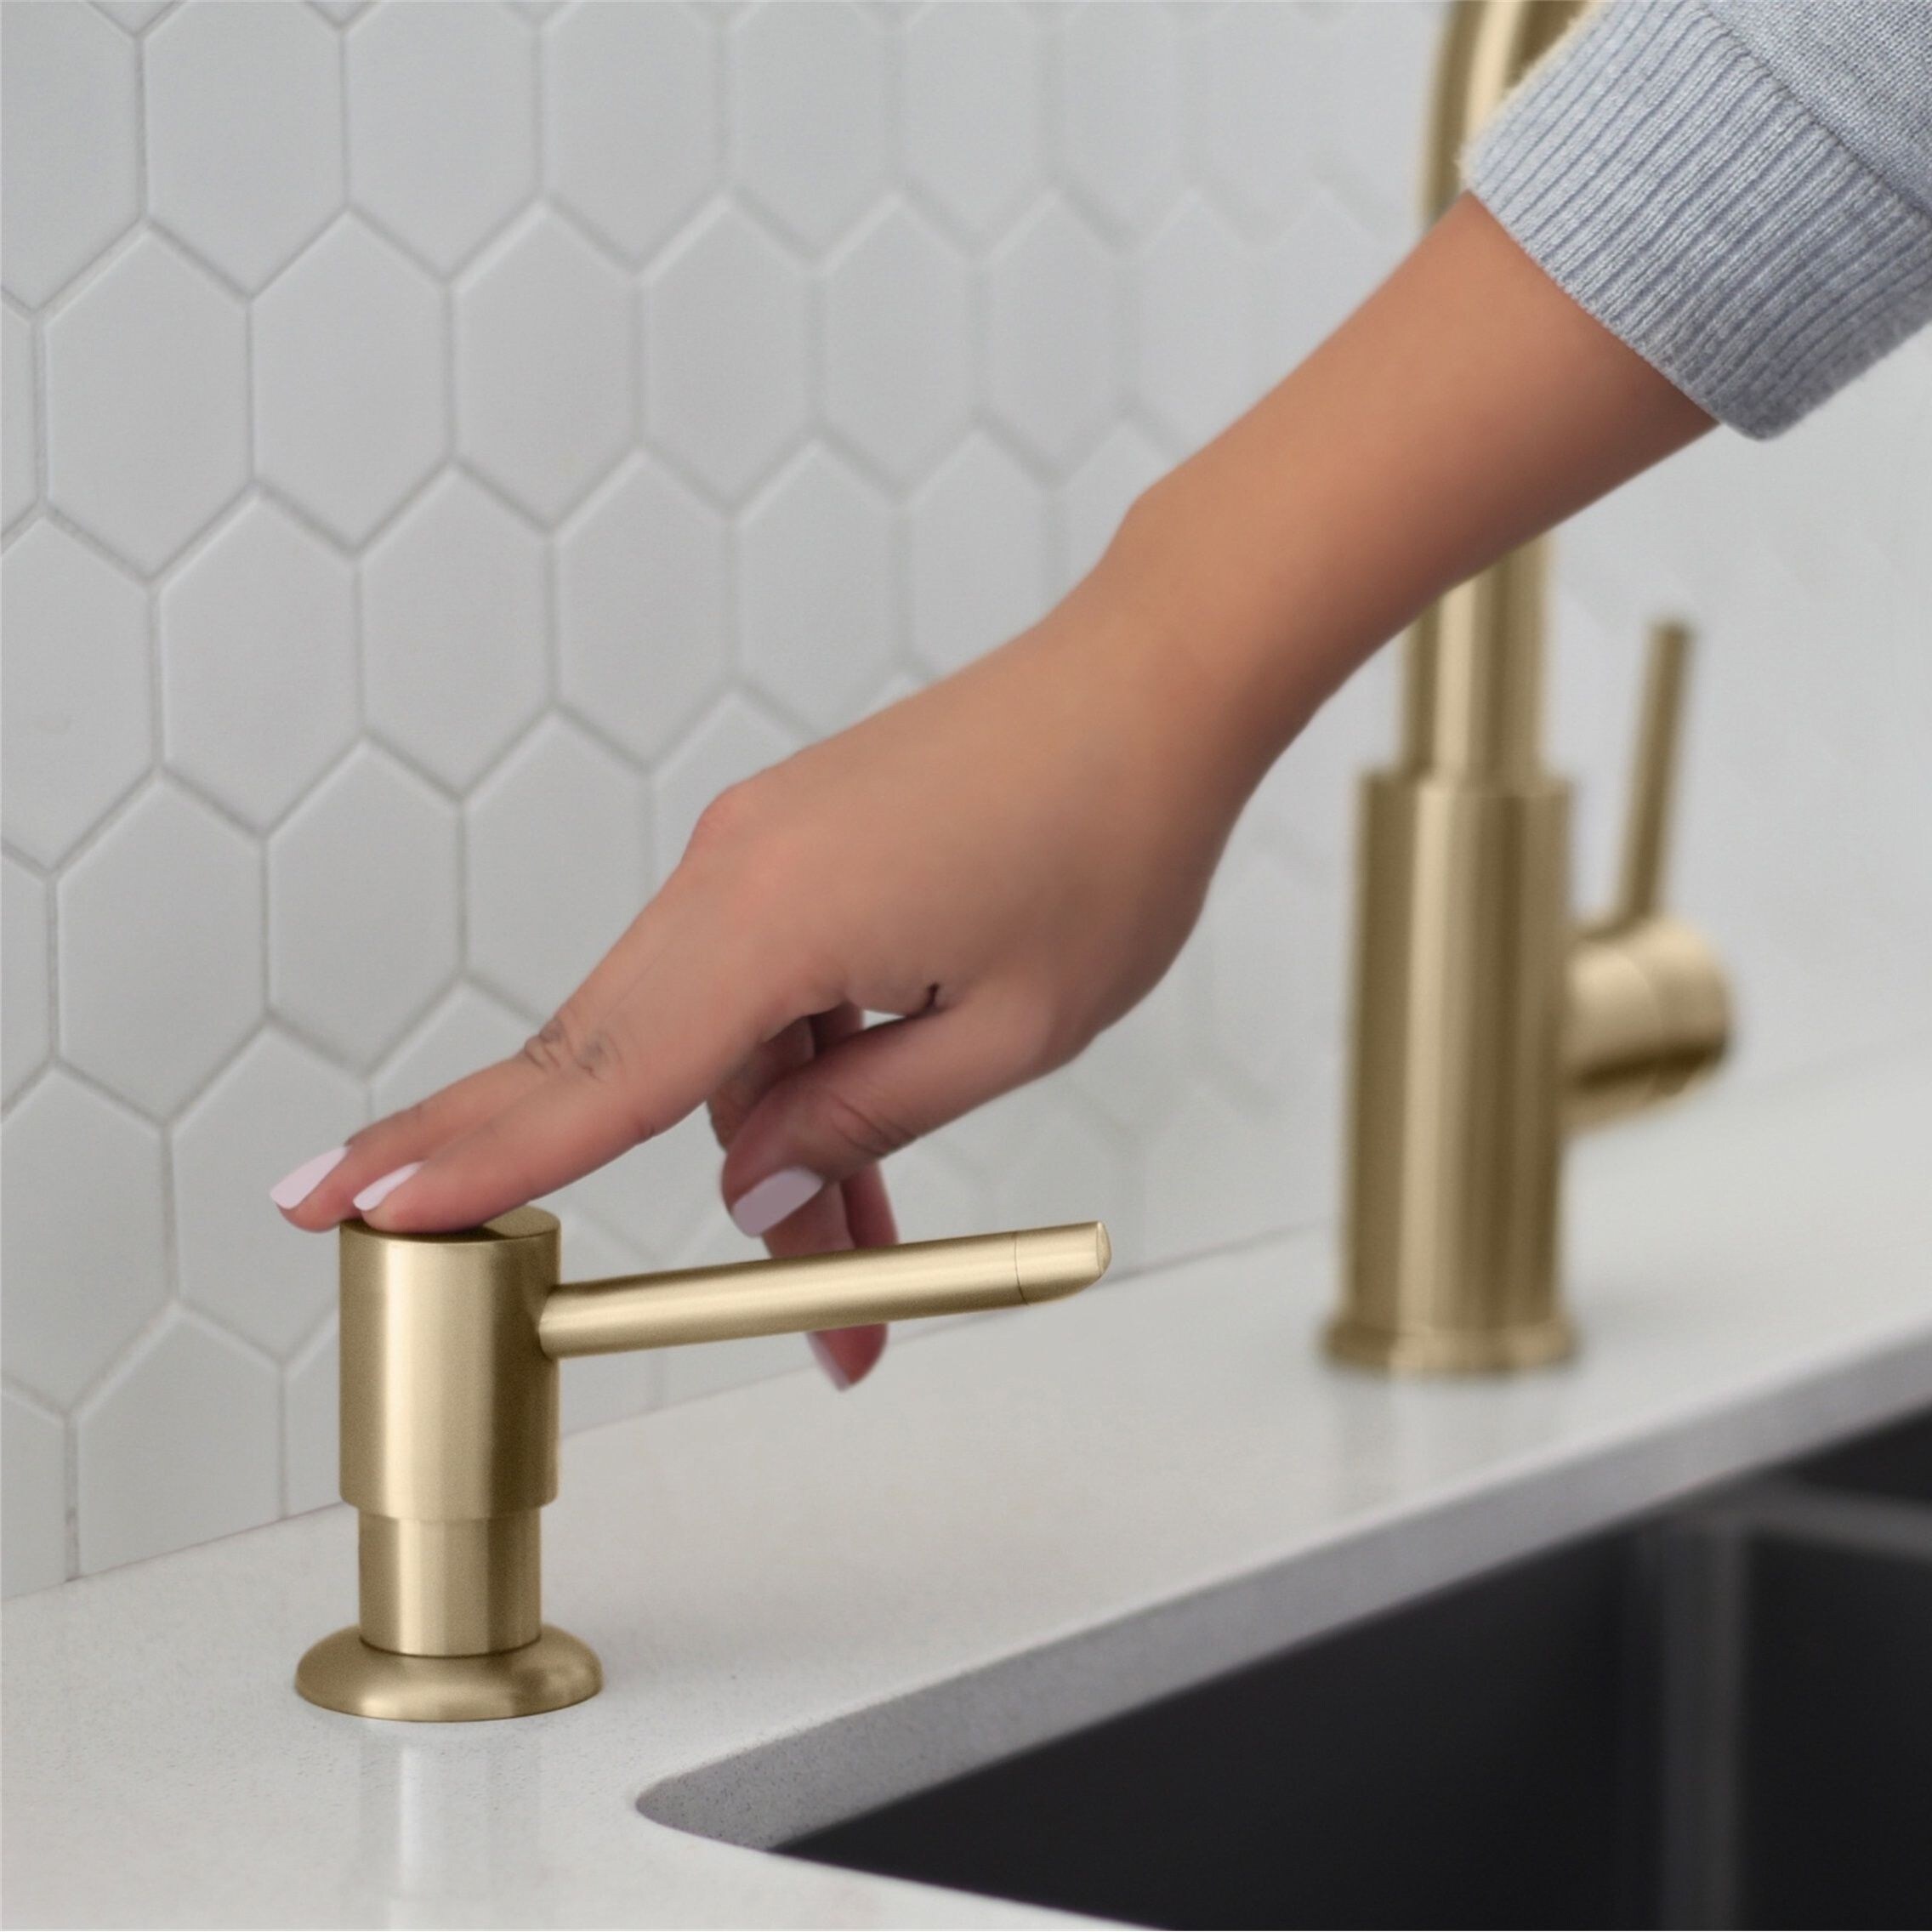 STYLISH Pull Down Kitchen Faucet + Soap Dispenser - Gold Finish